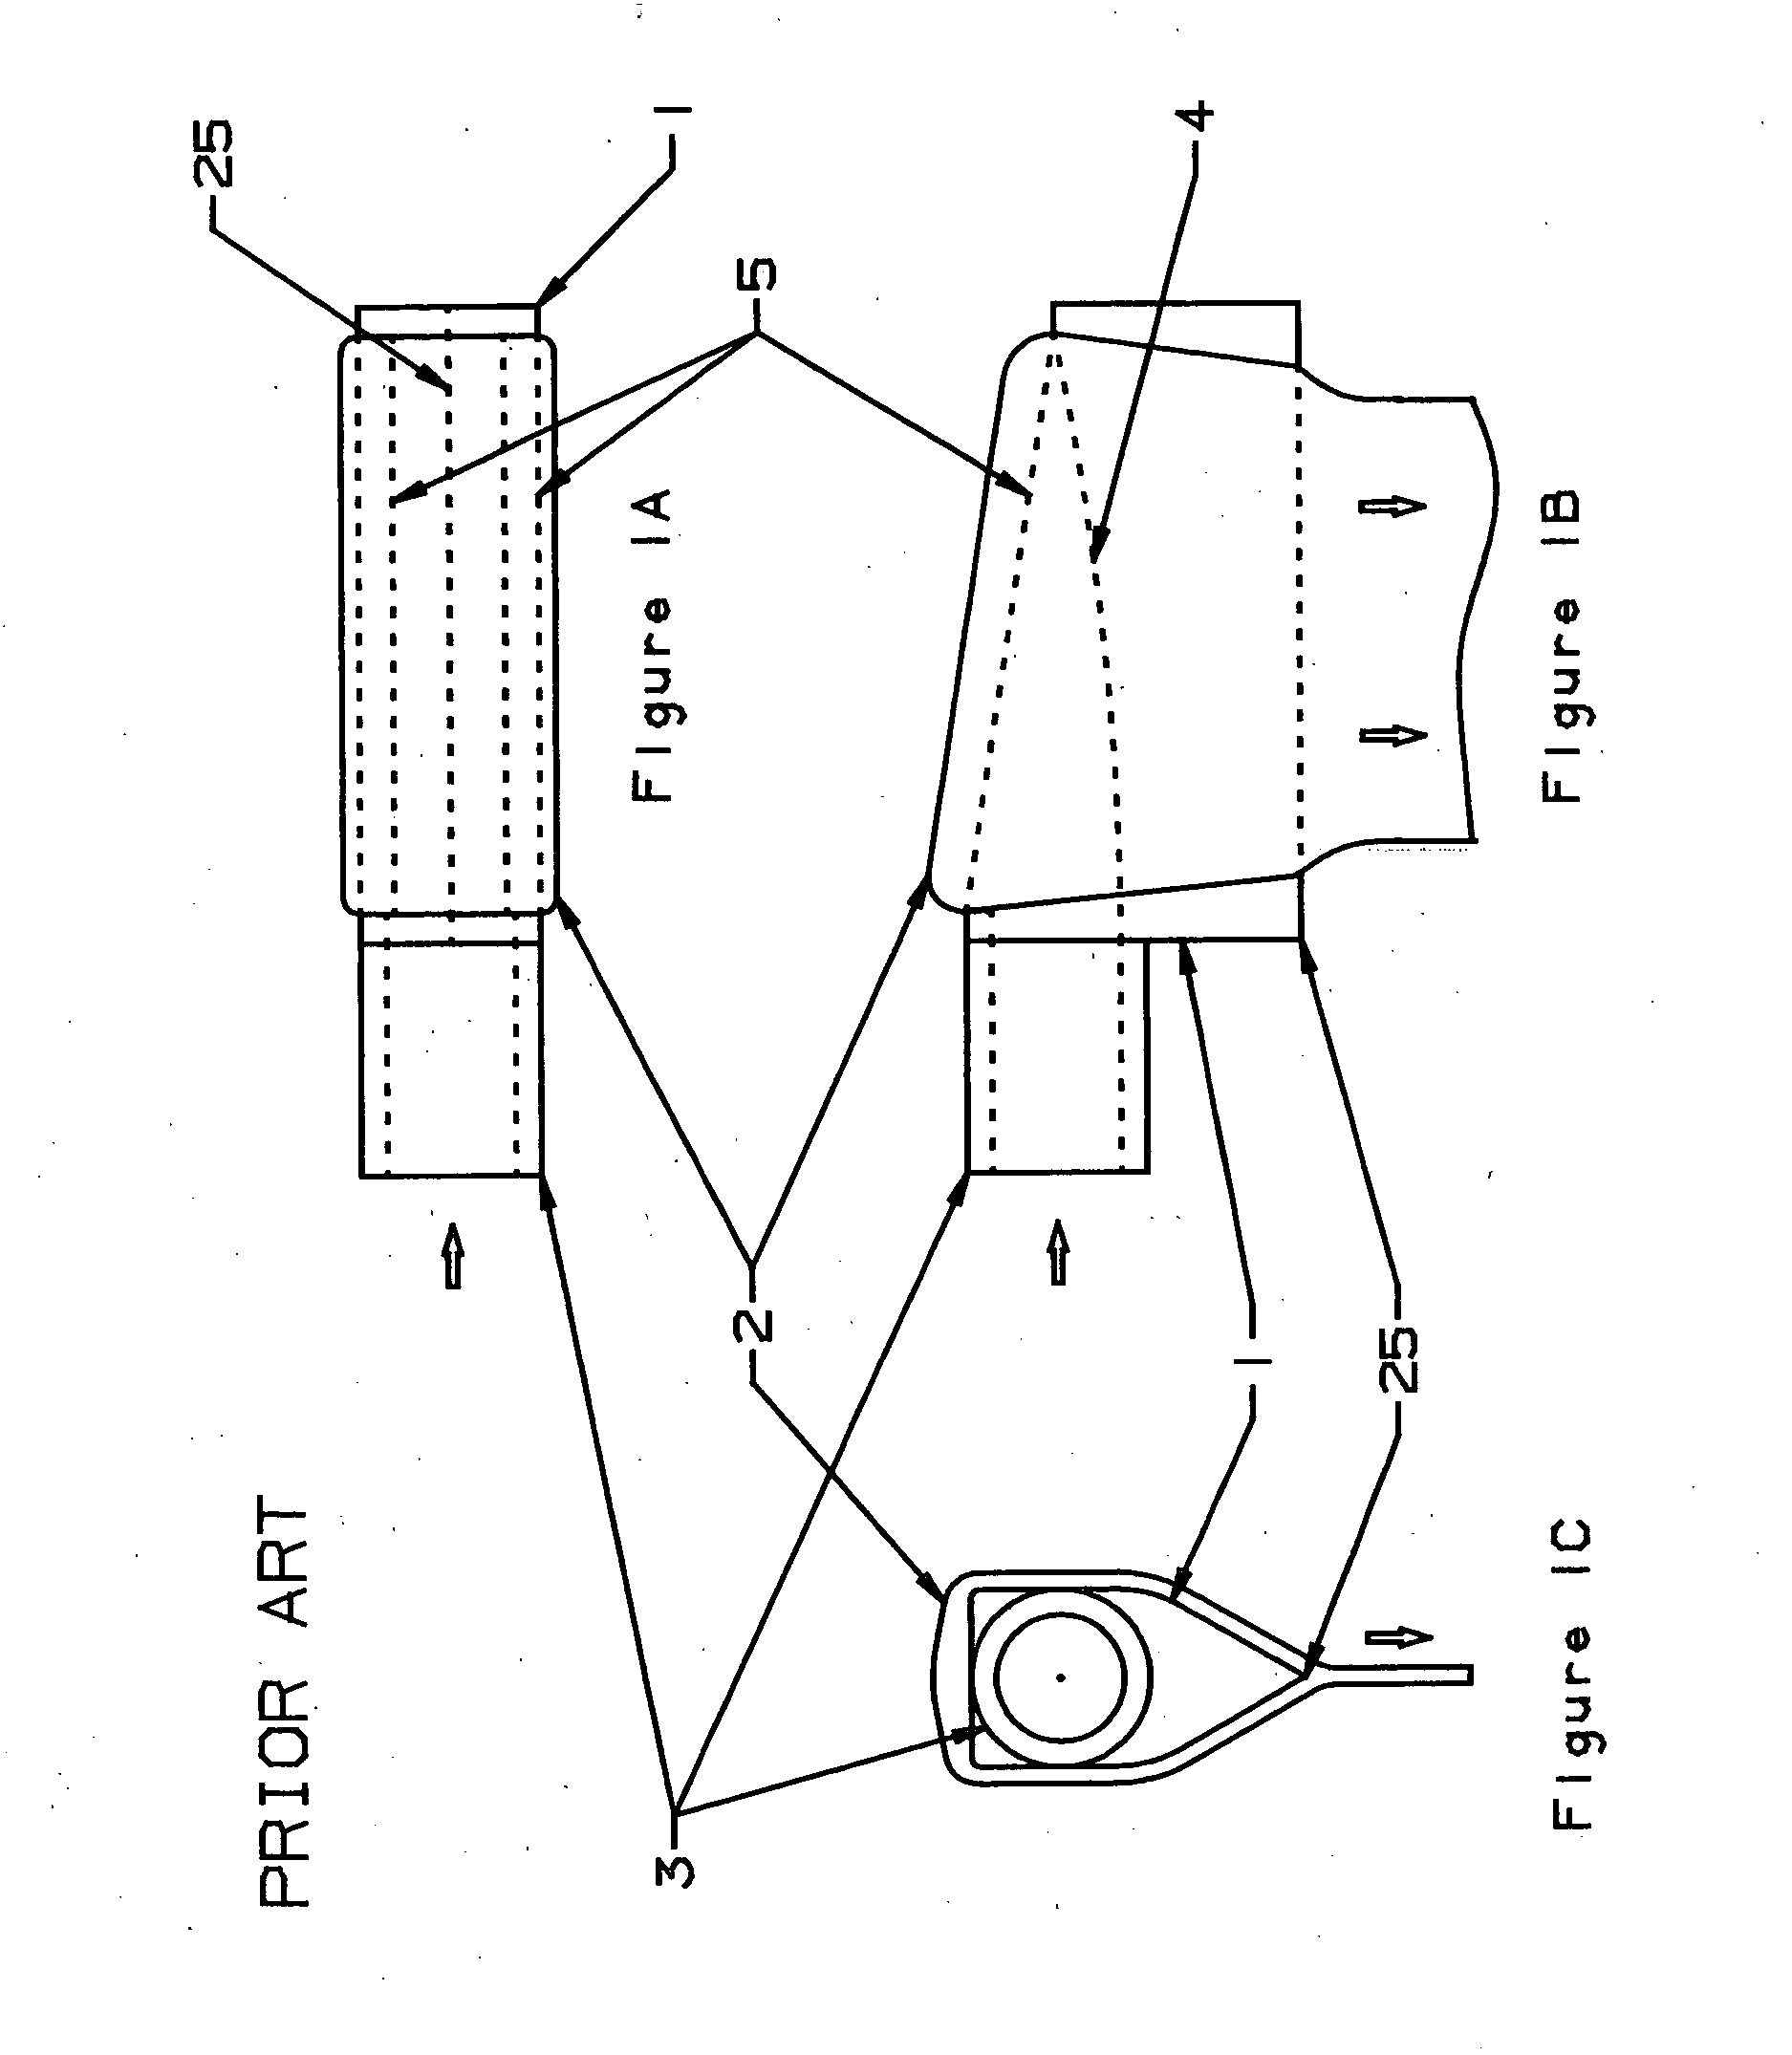 Sheet glass forming apparatus